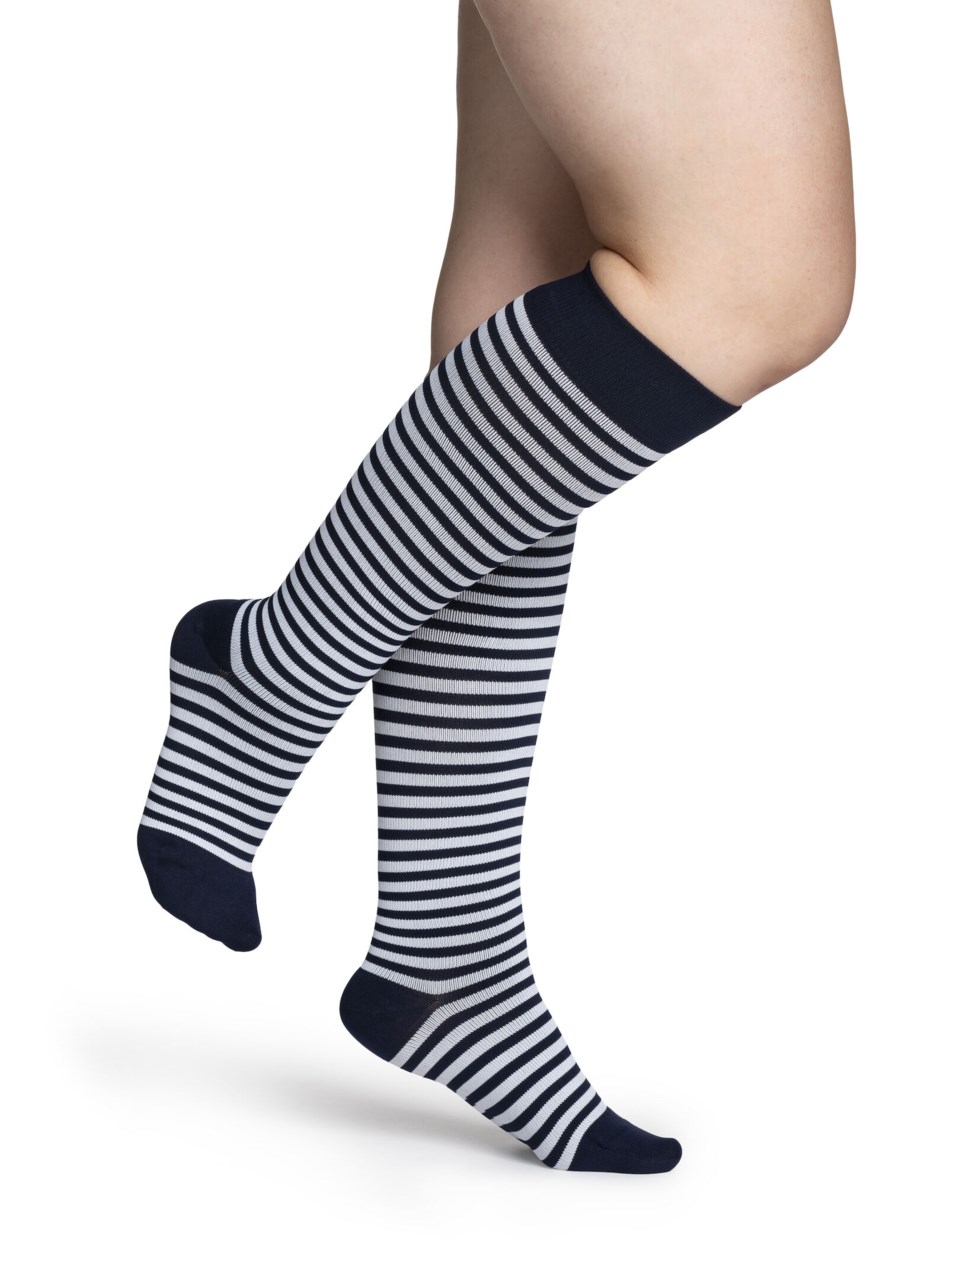 Female wearing WELLBEING MICROFIBER SHADES compression socks in MARINER STRIPE